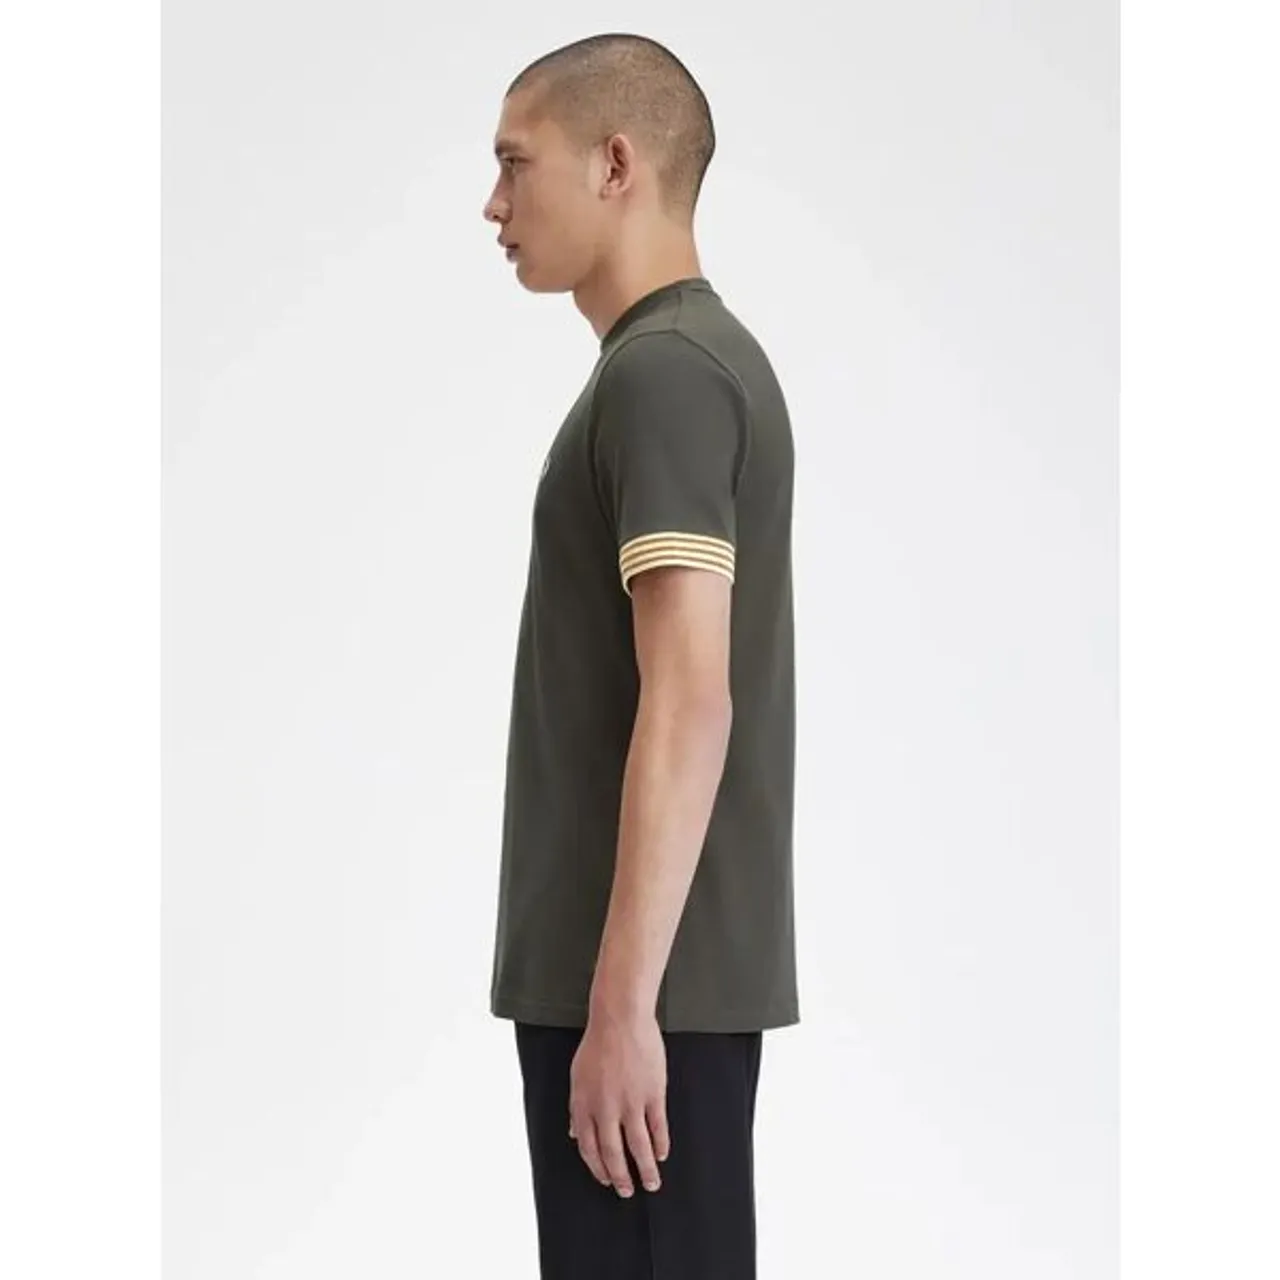 Fred Perry Stripe Cuff T-Shirt, Green/Multi - Green/Multi - Male